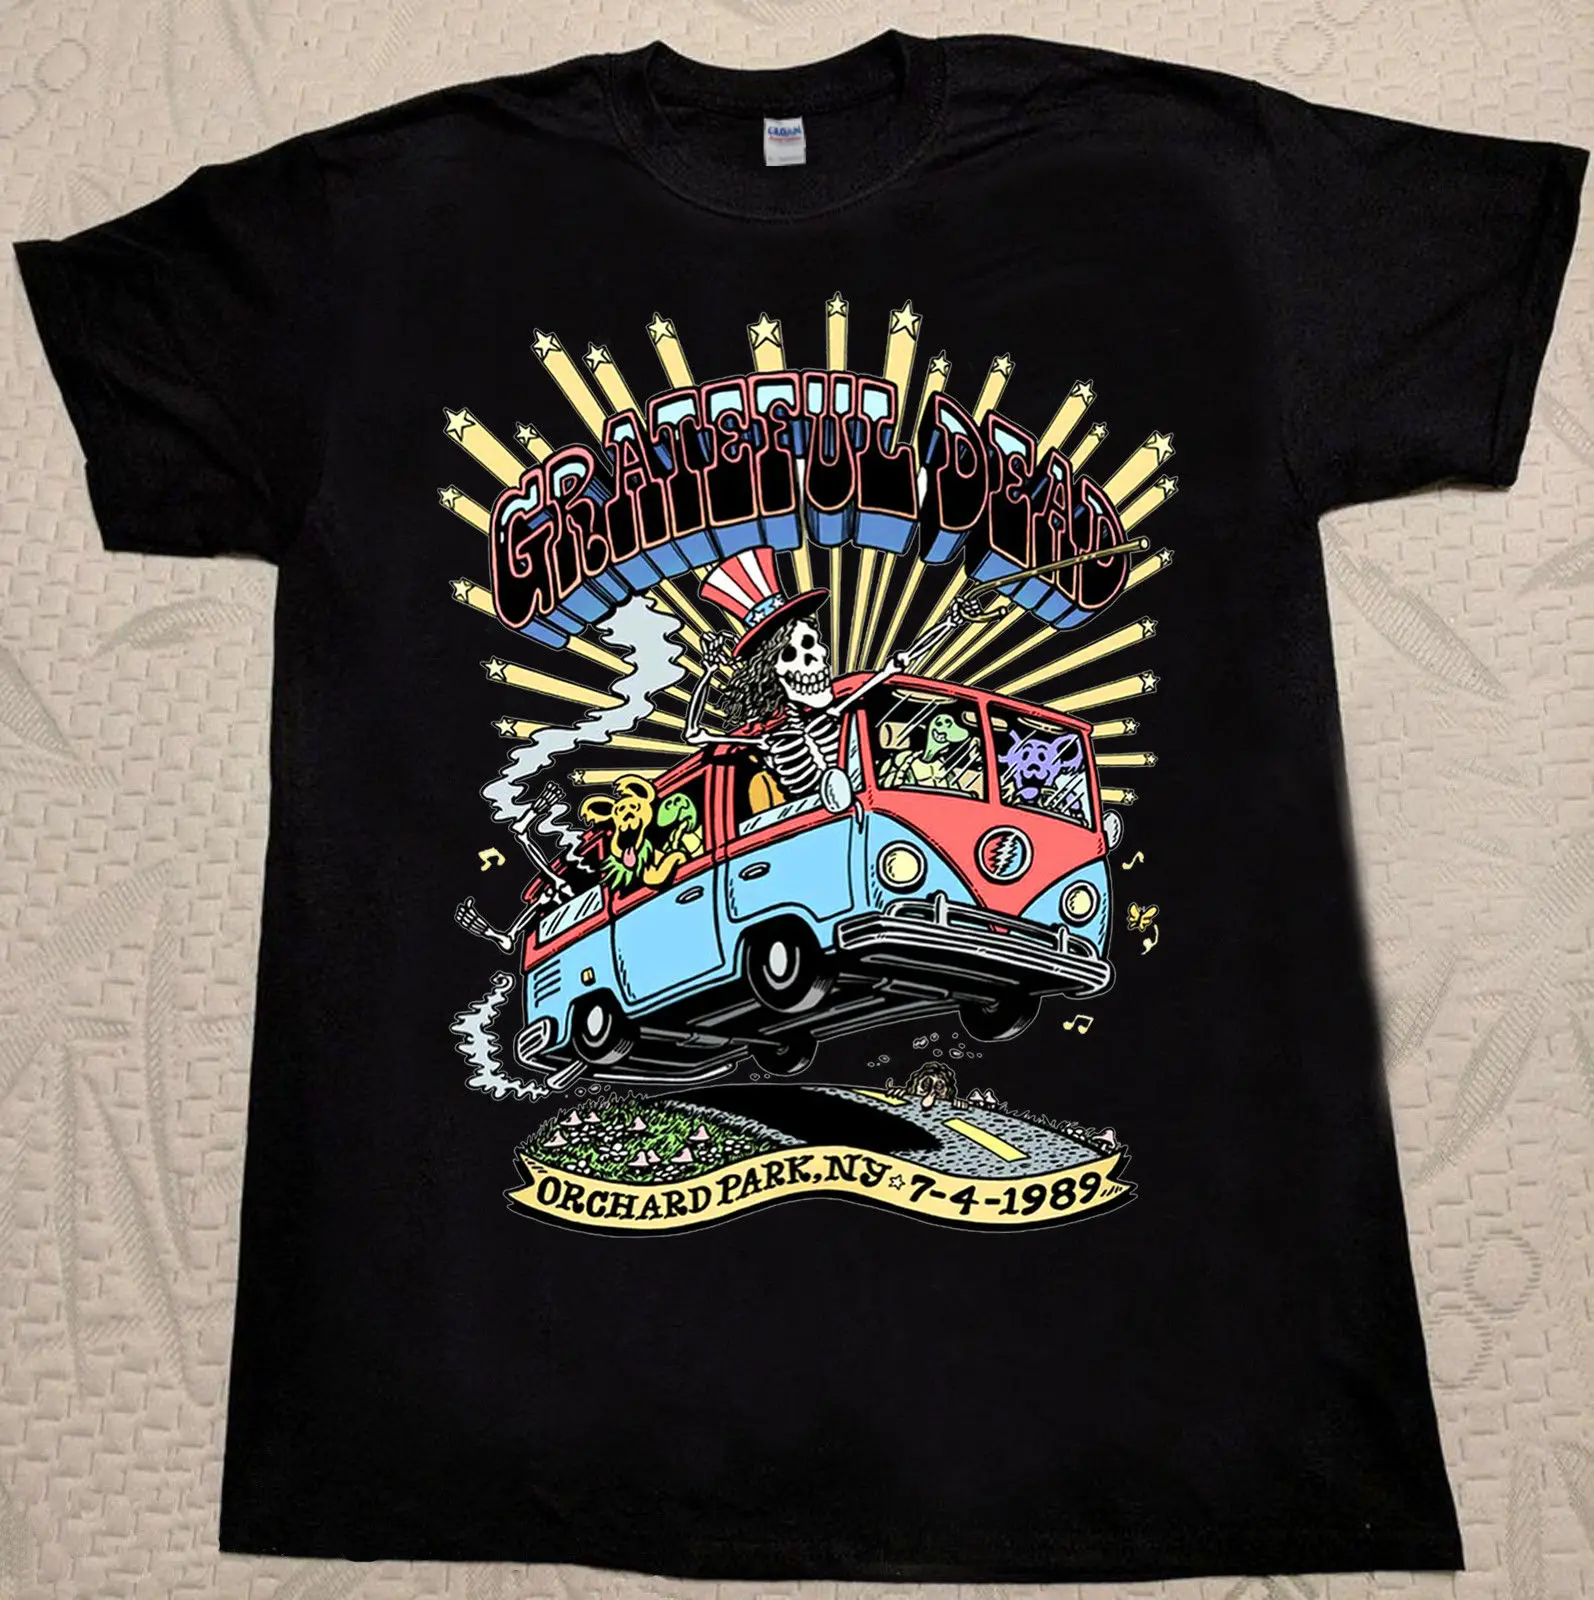 

Vintage 1989 Grateful Dead Orchard Park Ny Tour T-Shirt Reprint T Shirt Printing 100% Cotton Classic Tee 2019 Hot Tees